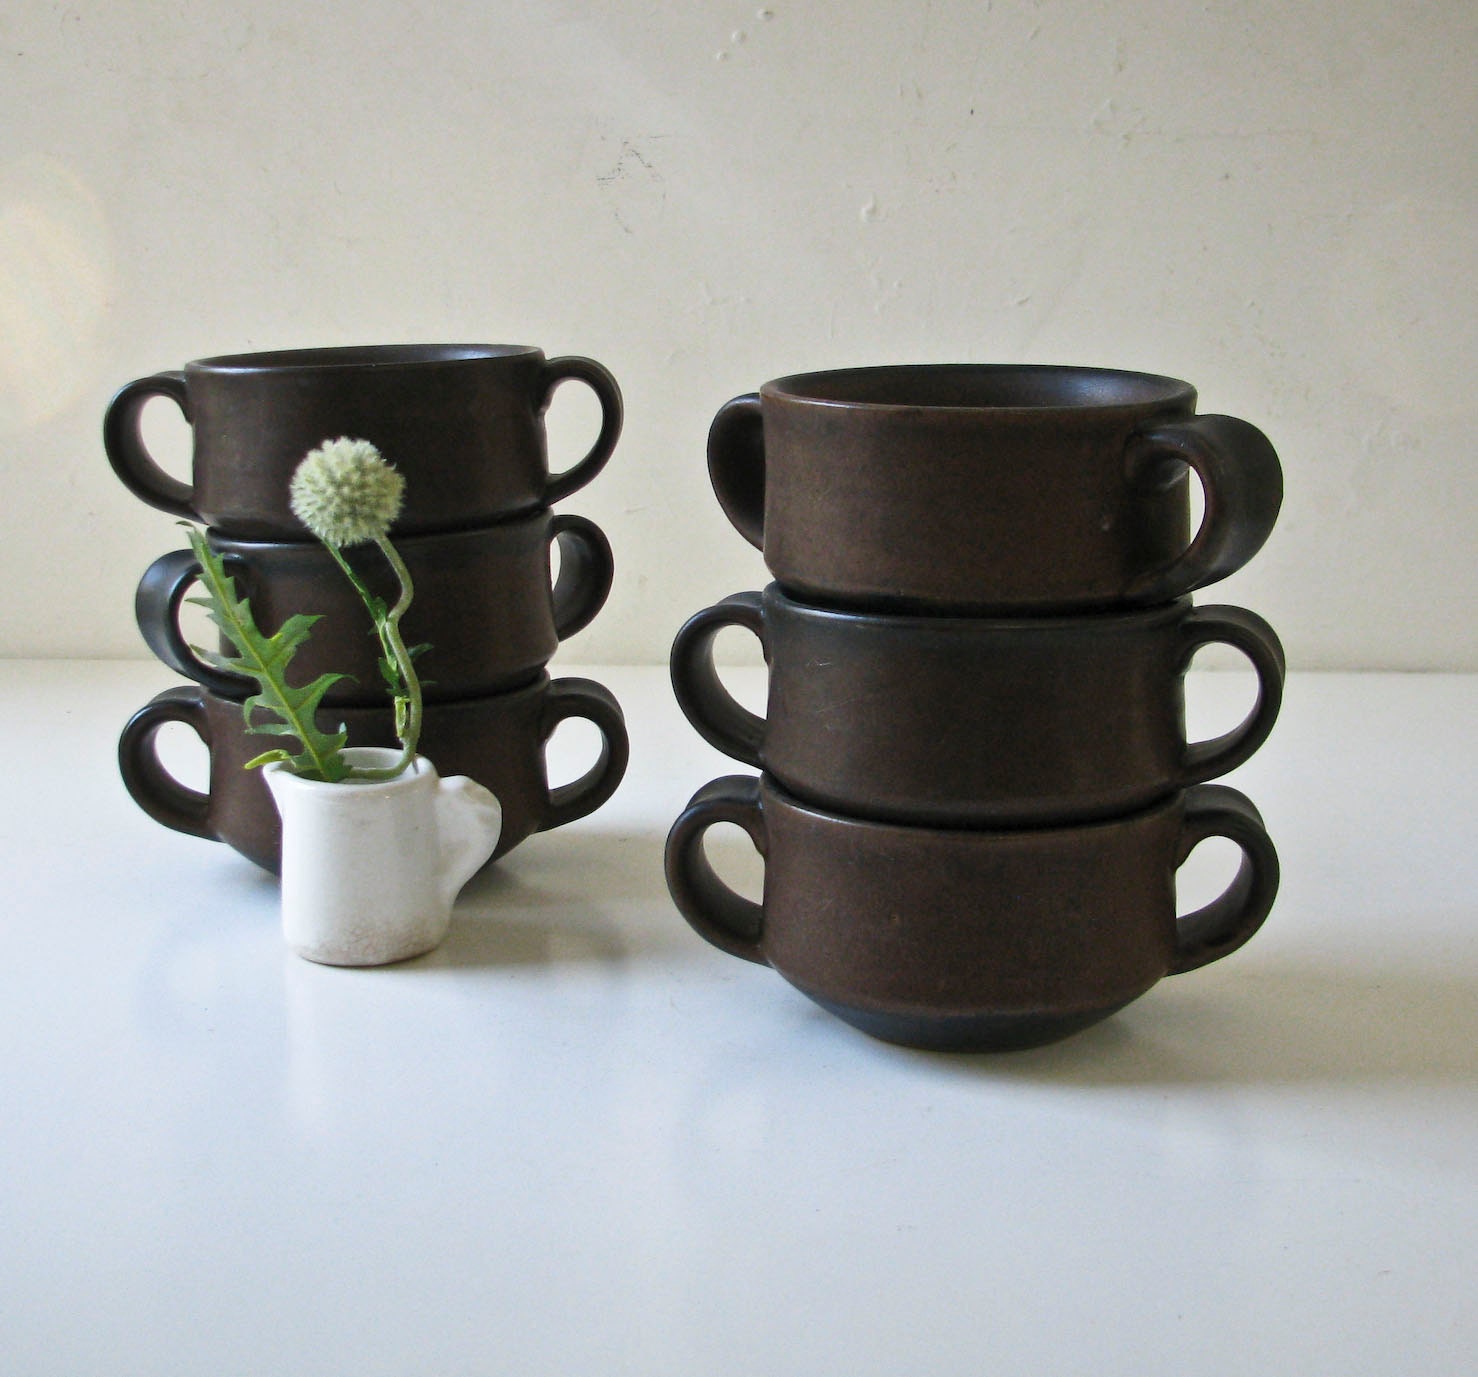 6 Ironstone Soup Mug Bowls - Brown Clay - Brown Glaze - BeeJayKay